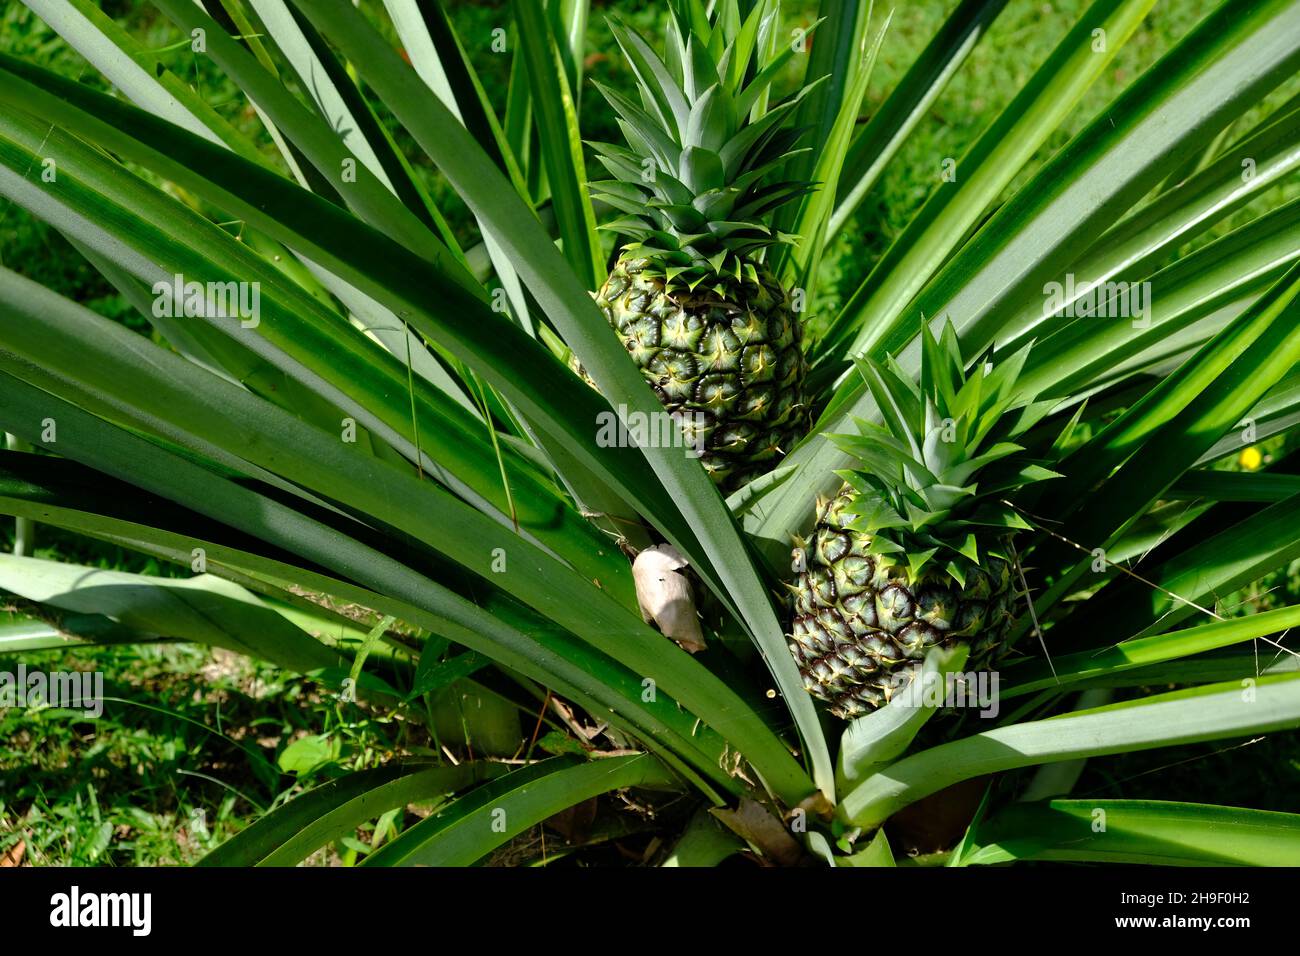 Costa Rica Tortuguero National Park - Parque Nacional Tortuguero - Pineapple plant with fruit - Ananas comosus Stock Photo